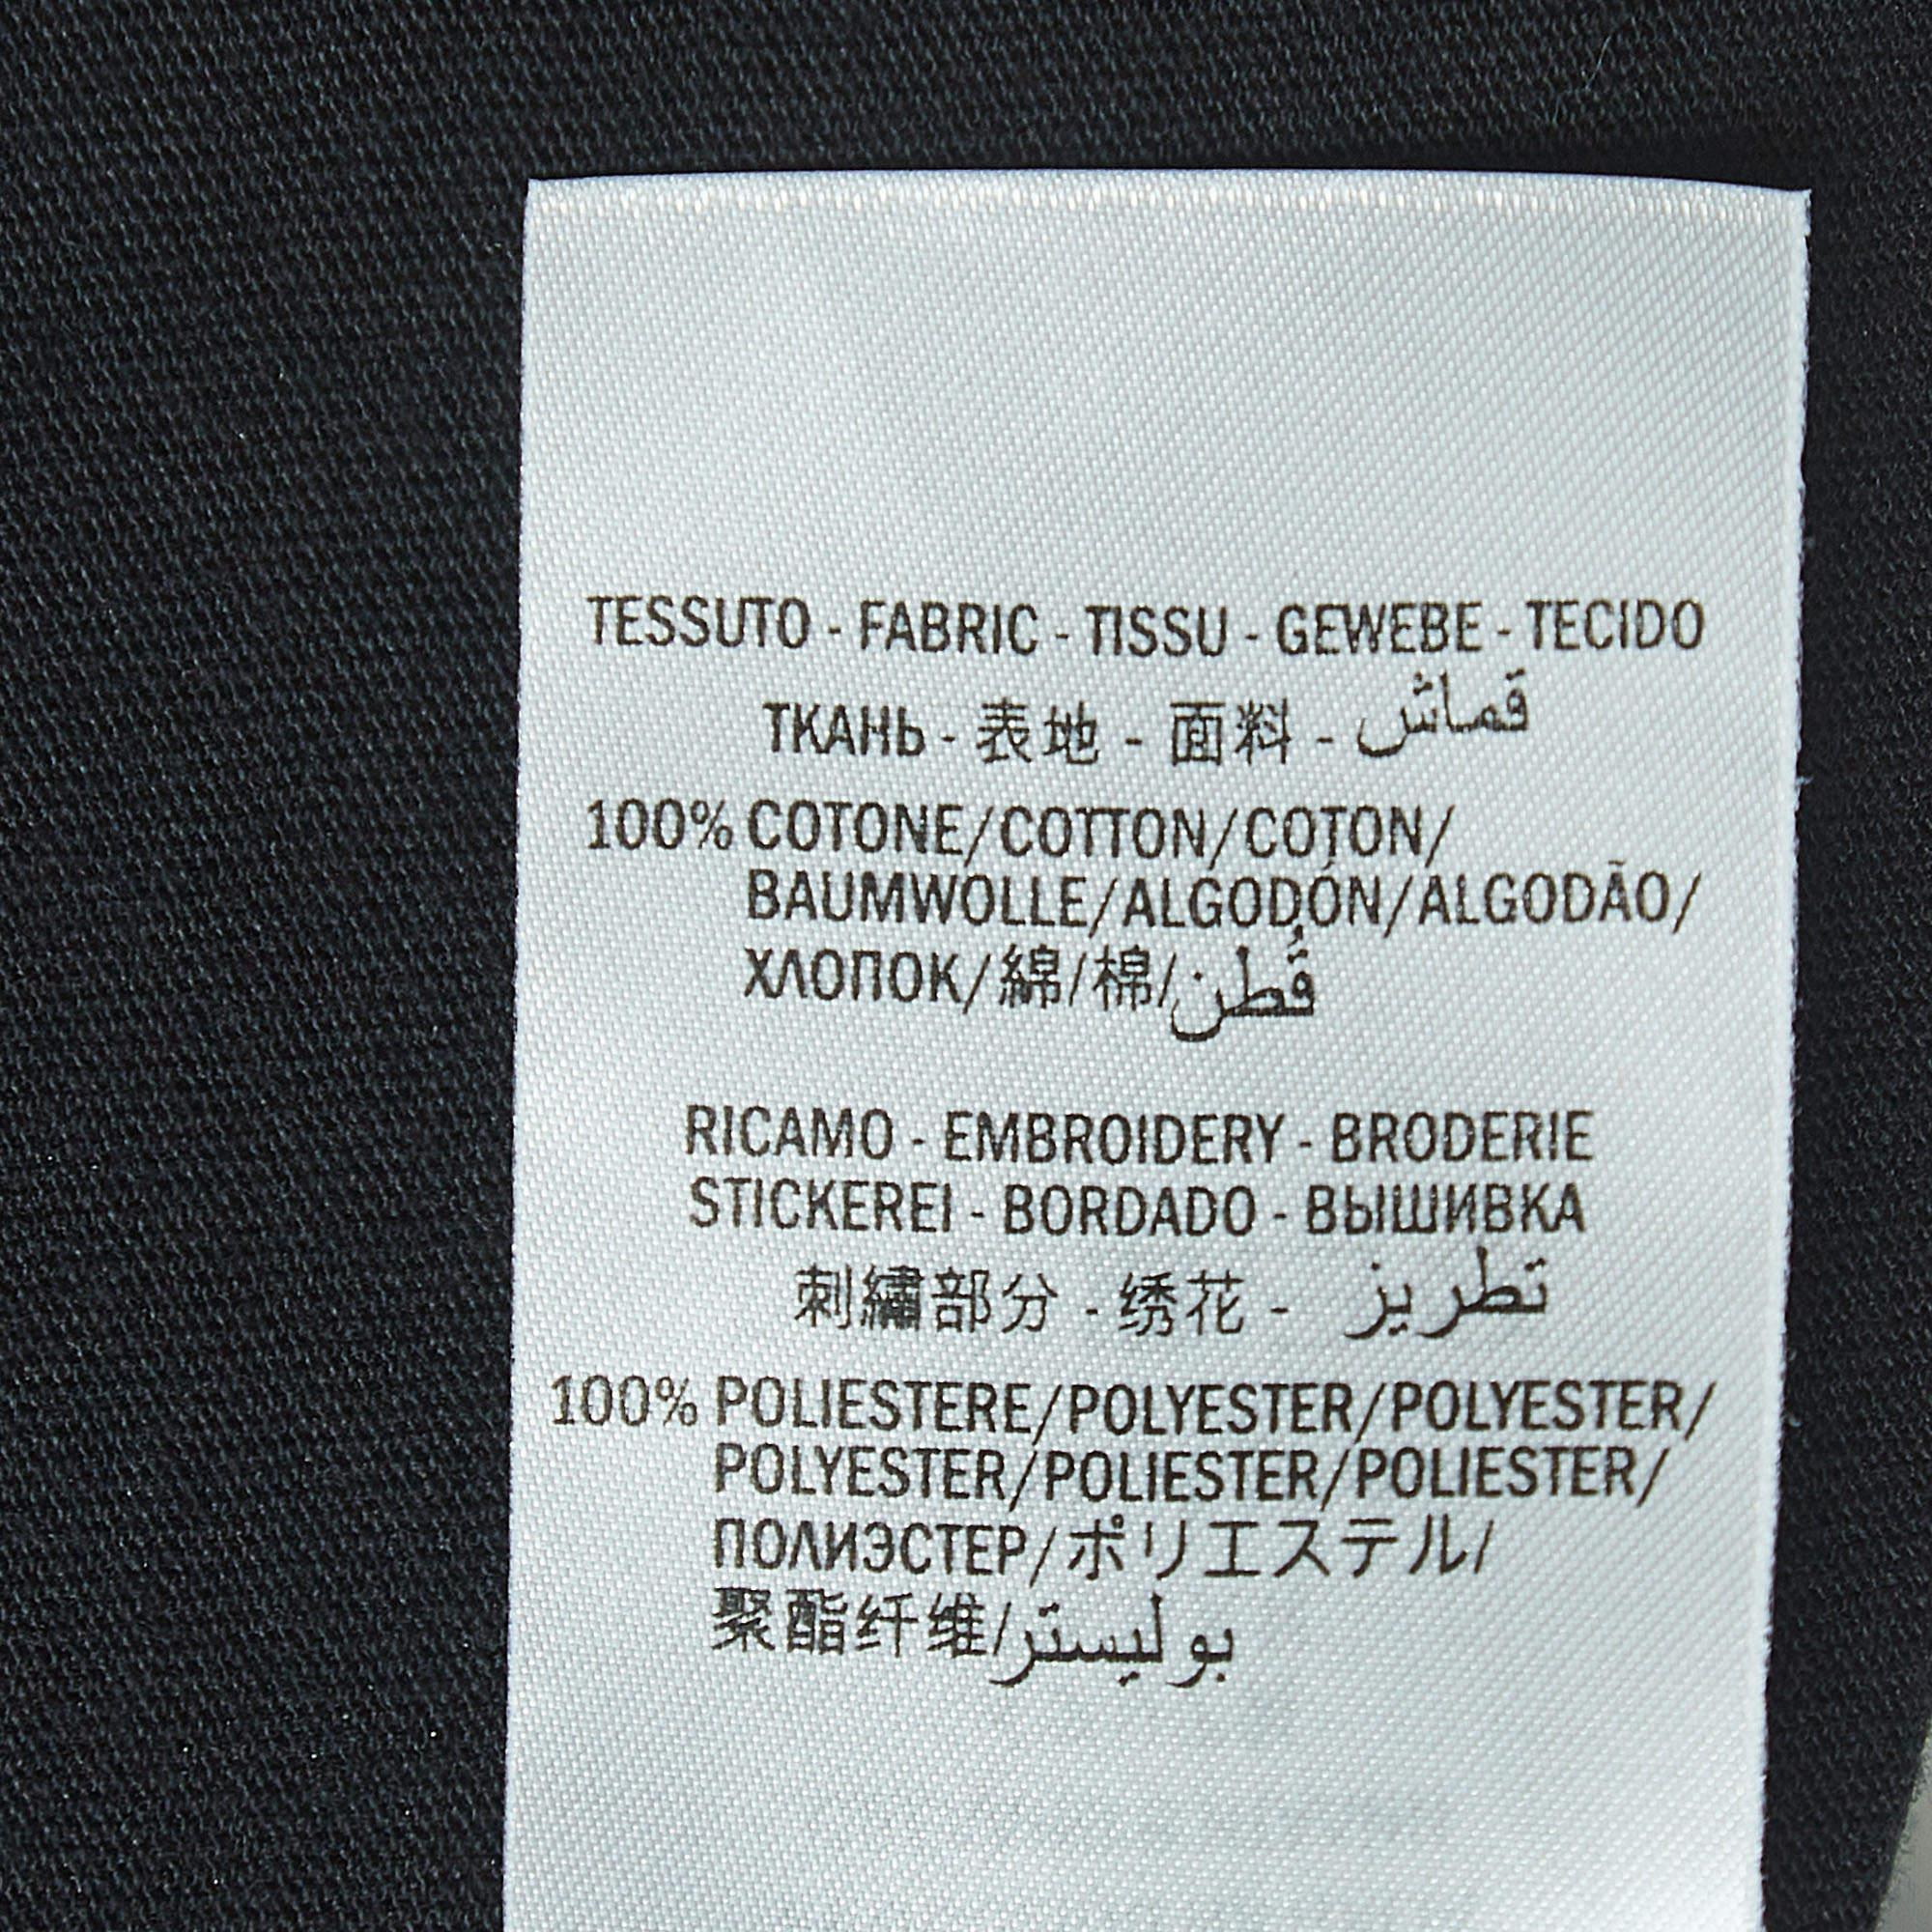 Gucci Black Embellished Bugs Bunny Cotton T-Shirt M In Excellent Condition For Sale In Dubai, Al Qouz 2